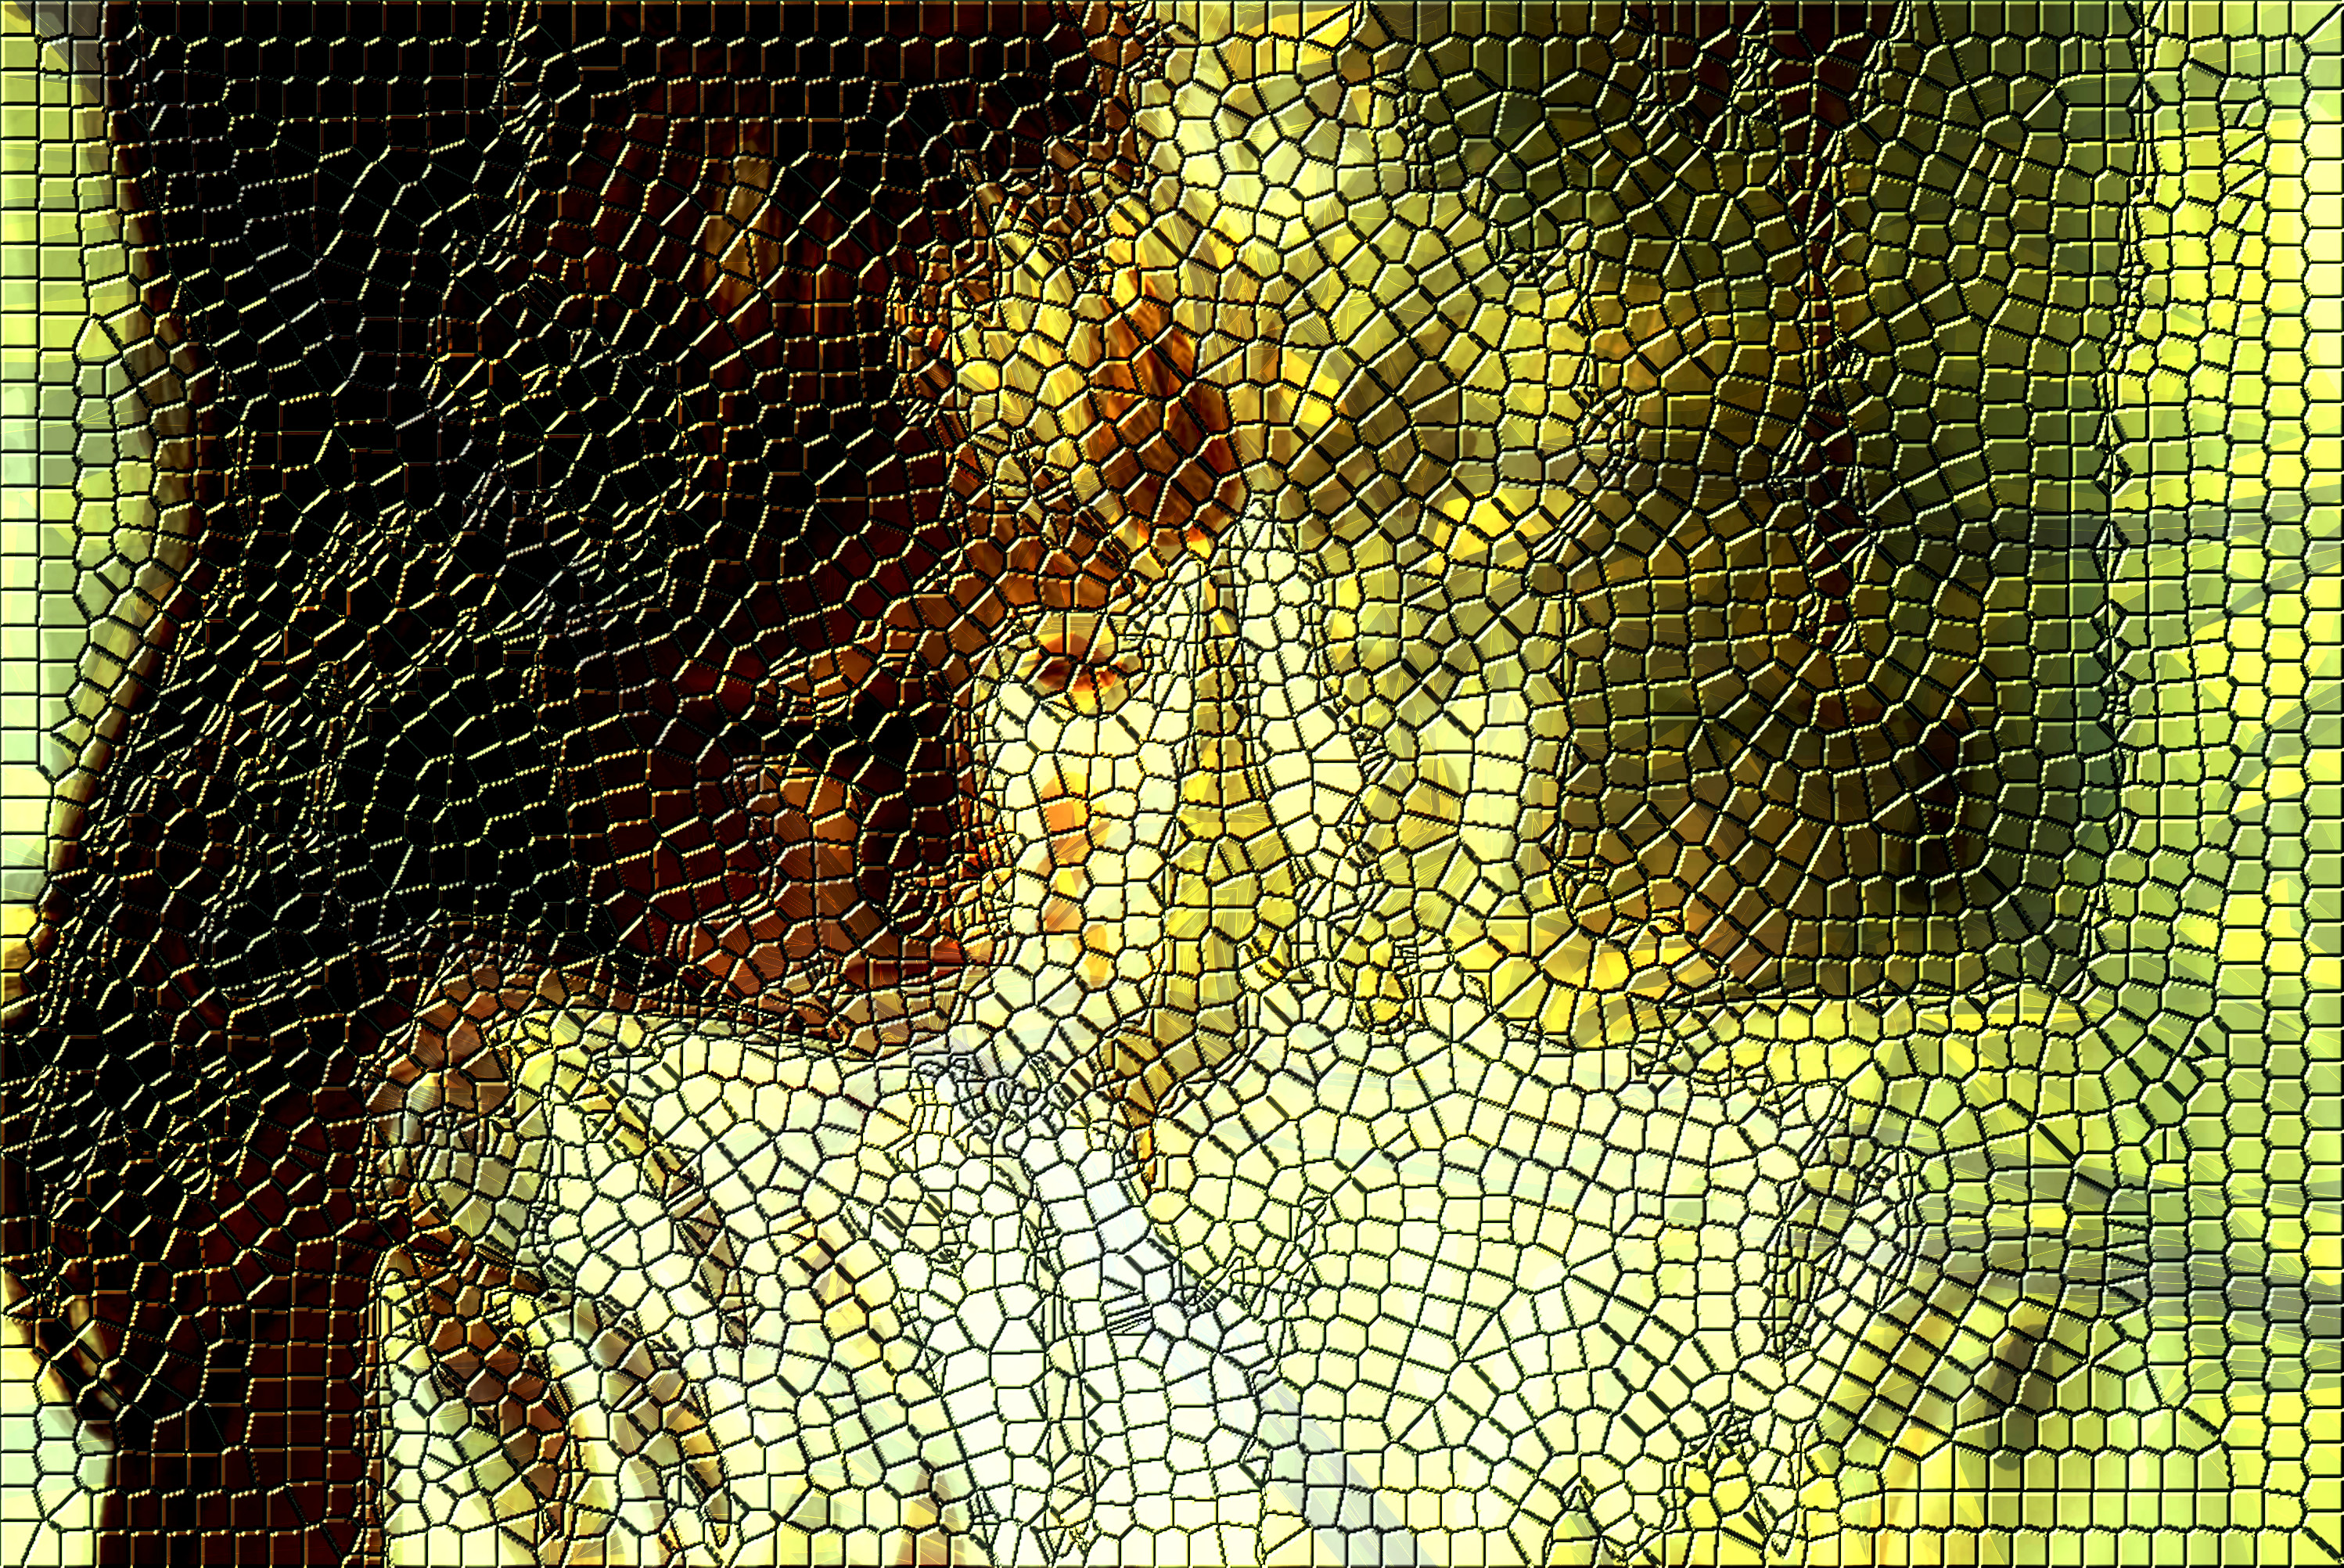 2020-04-11 14-29-22 _20__by_anastasiya_landa_d596gt4-pre, as a Mosaic Roman style, with an optional light effect.jpg